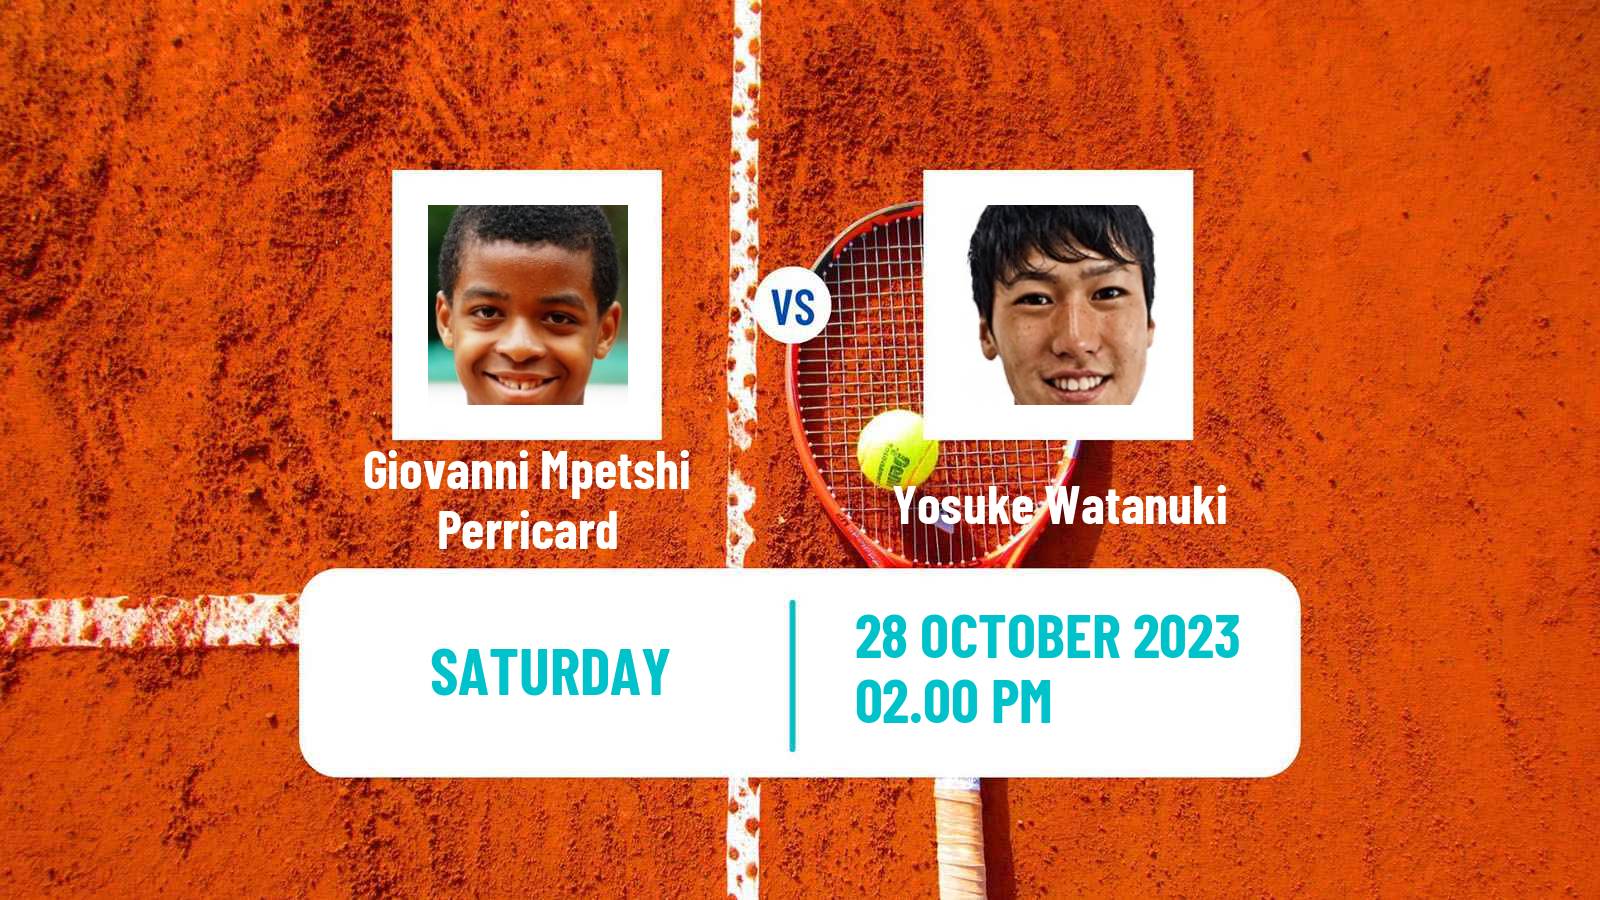 Tennis ATP Paris Giovanni Mpetshi Perricard - Yosuke Watanuki